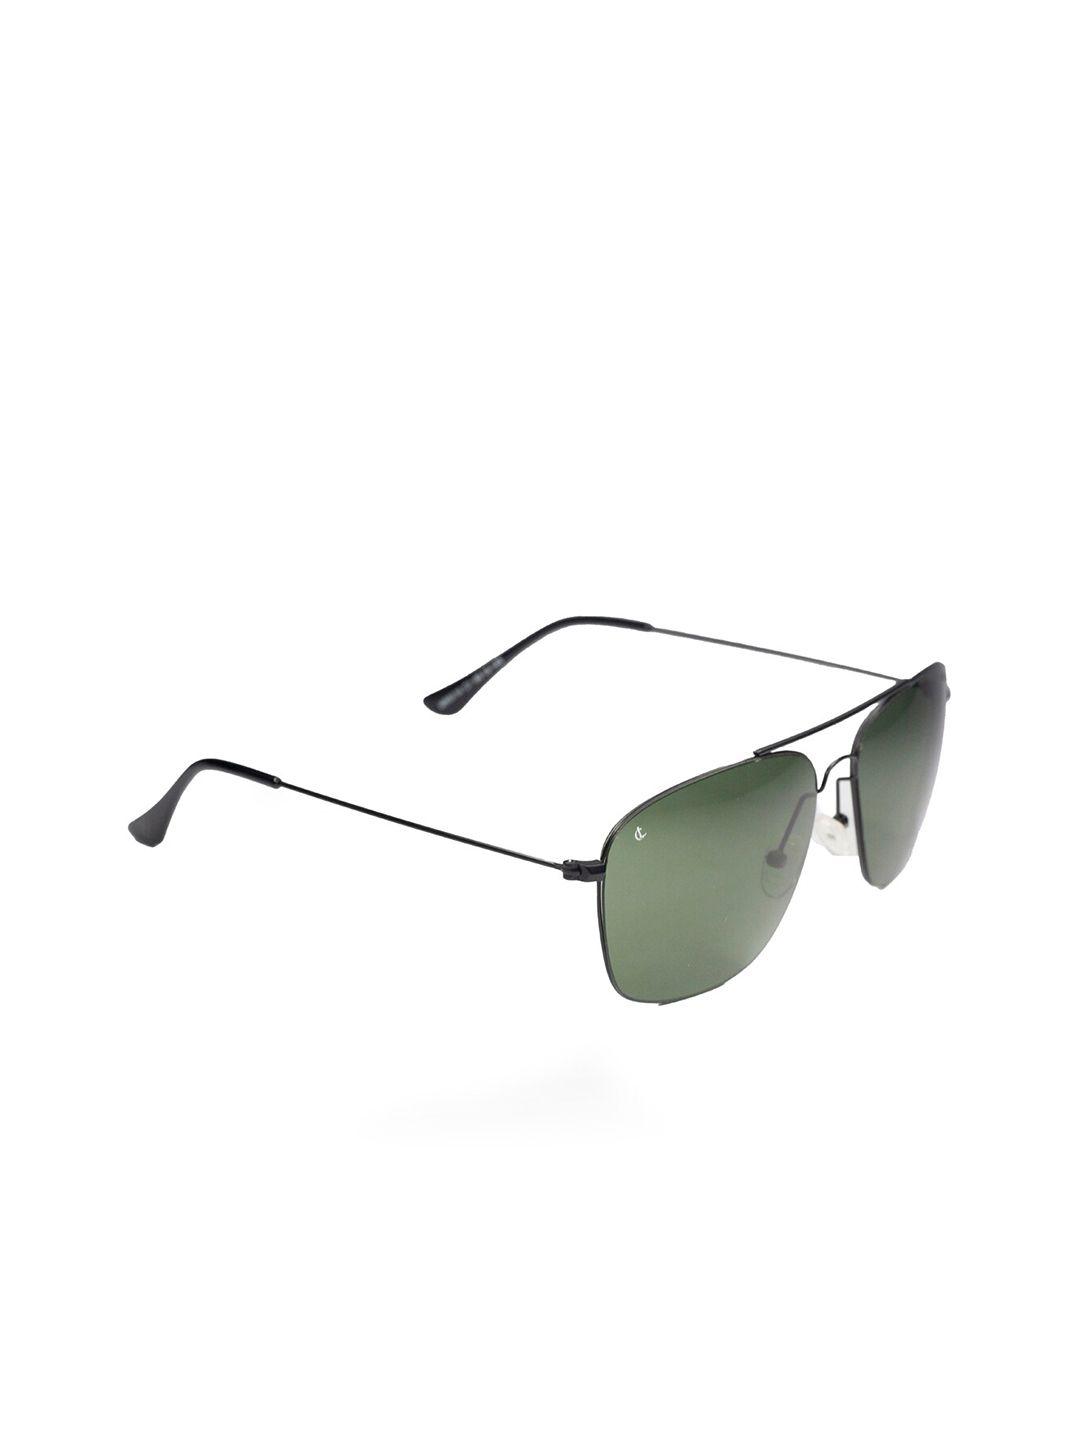 charles london adult green lens & black square sunglasses mr 9114 c1 60